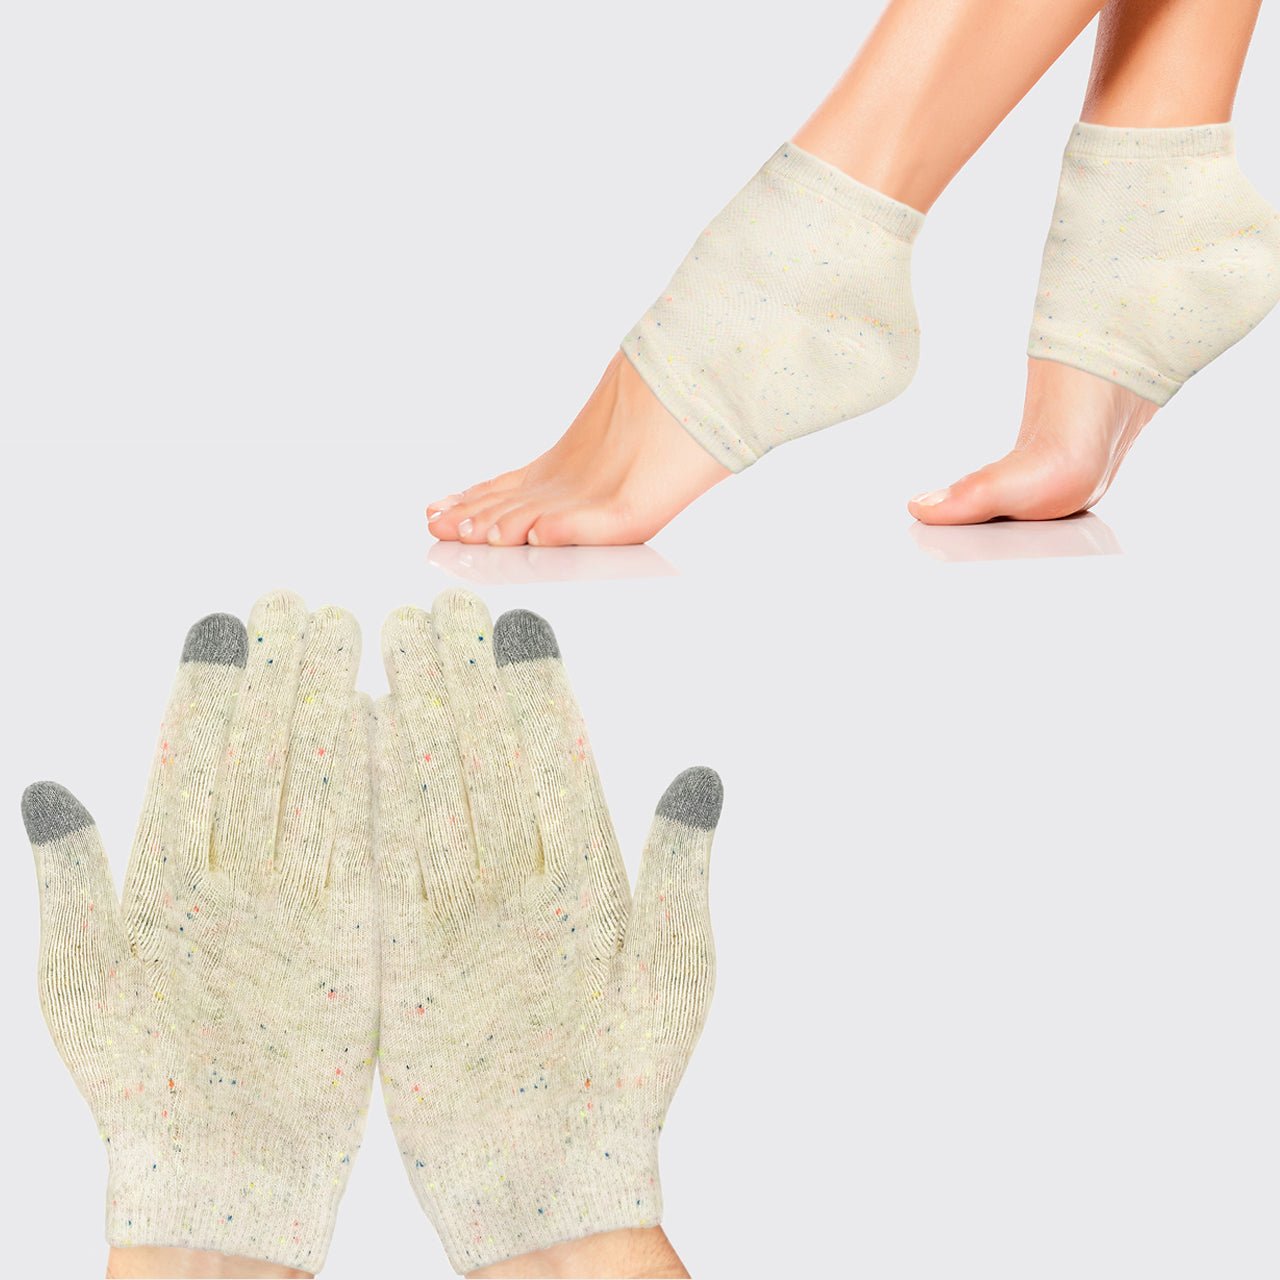 Kitsch Moisturizing Spa Socks & Gloves Bundle Hydrates, Softens